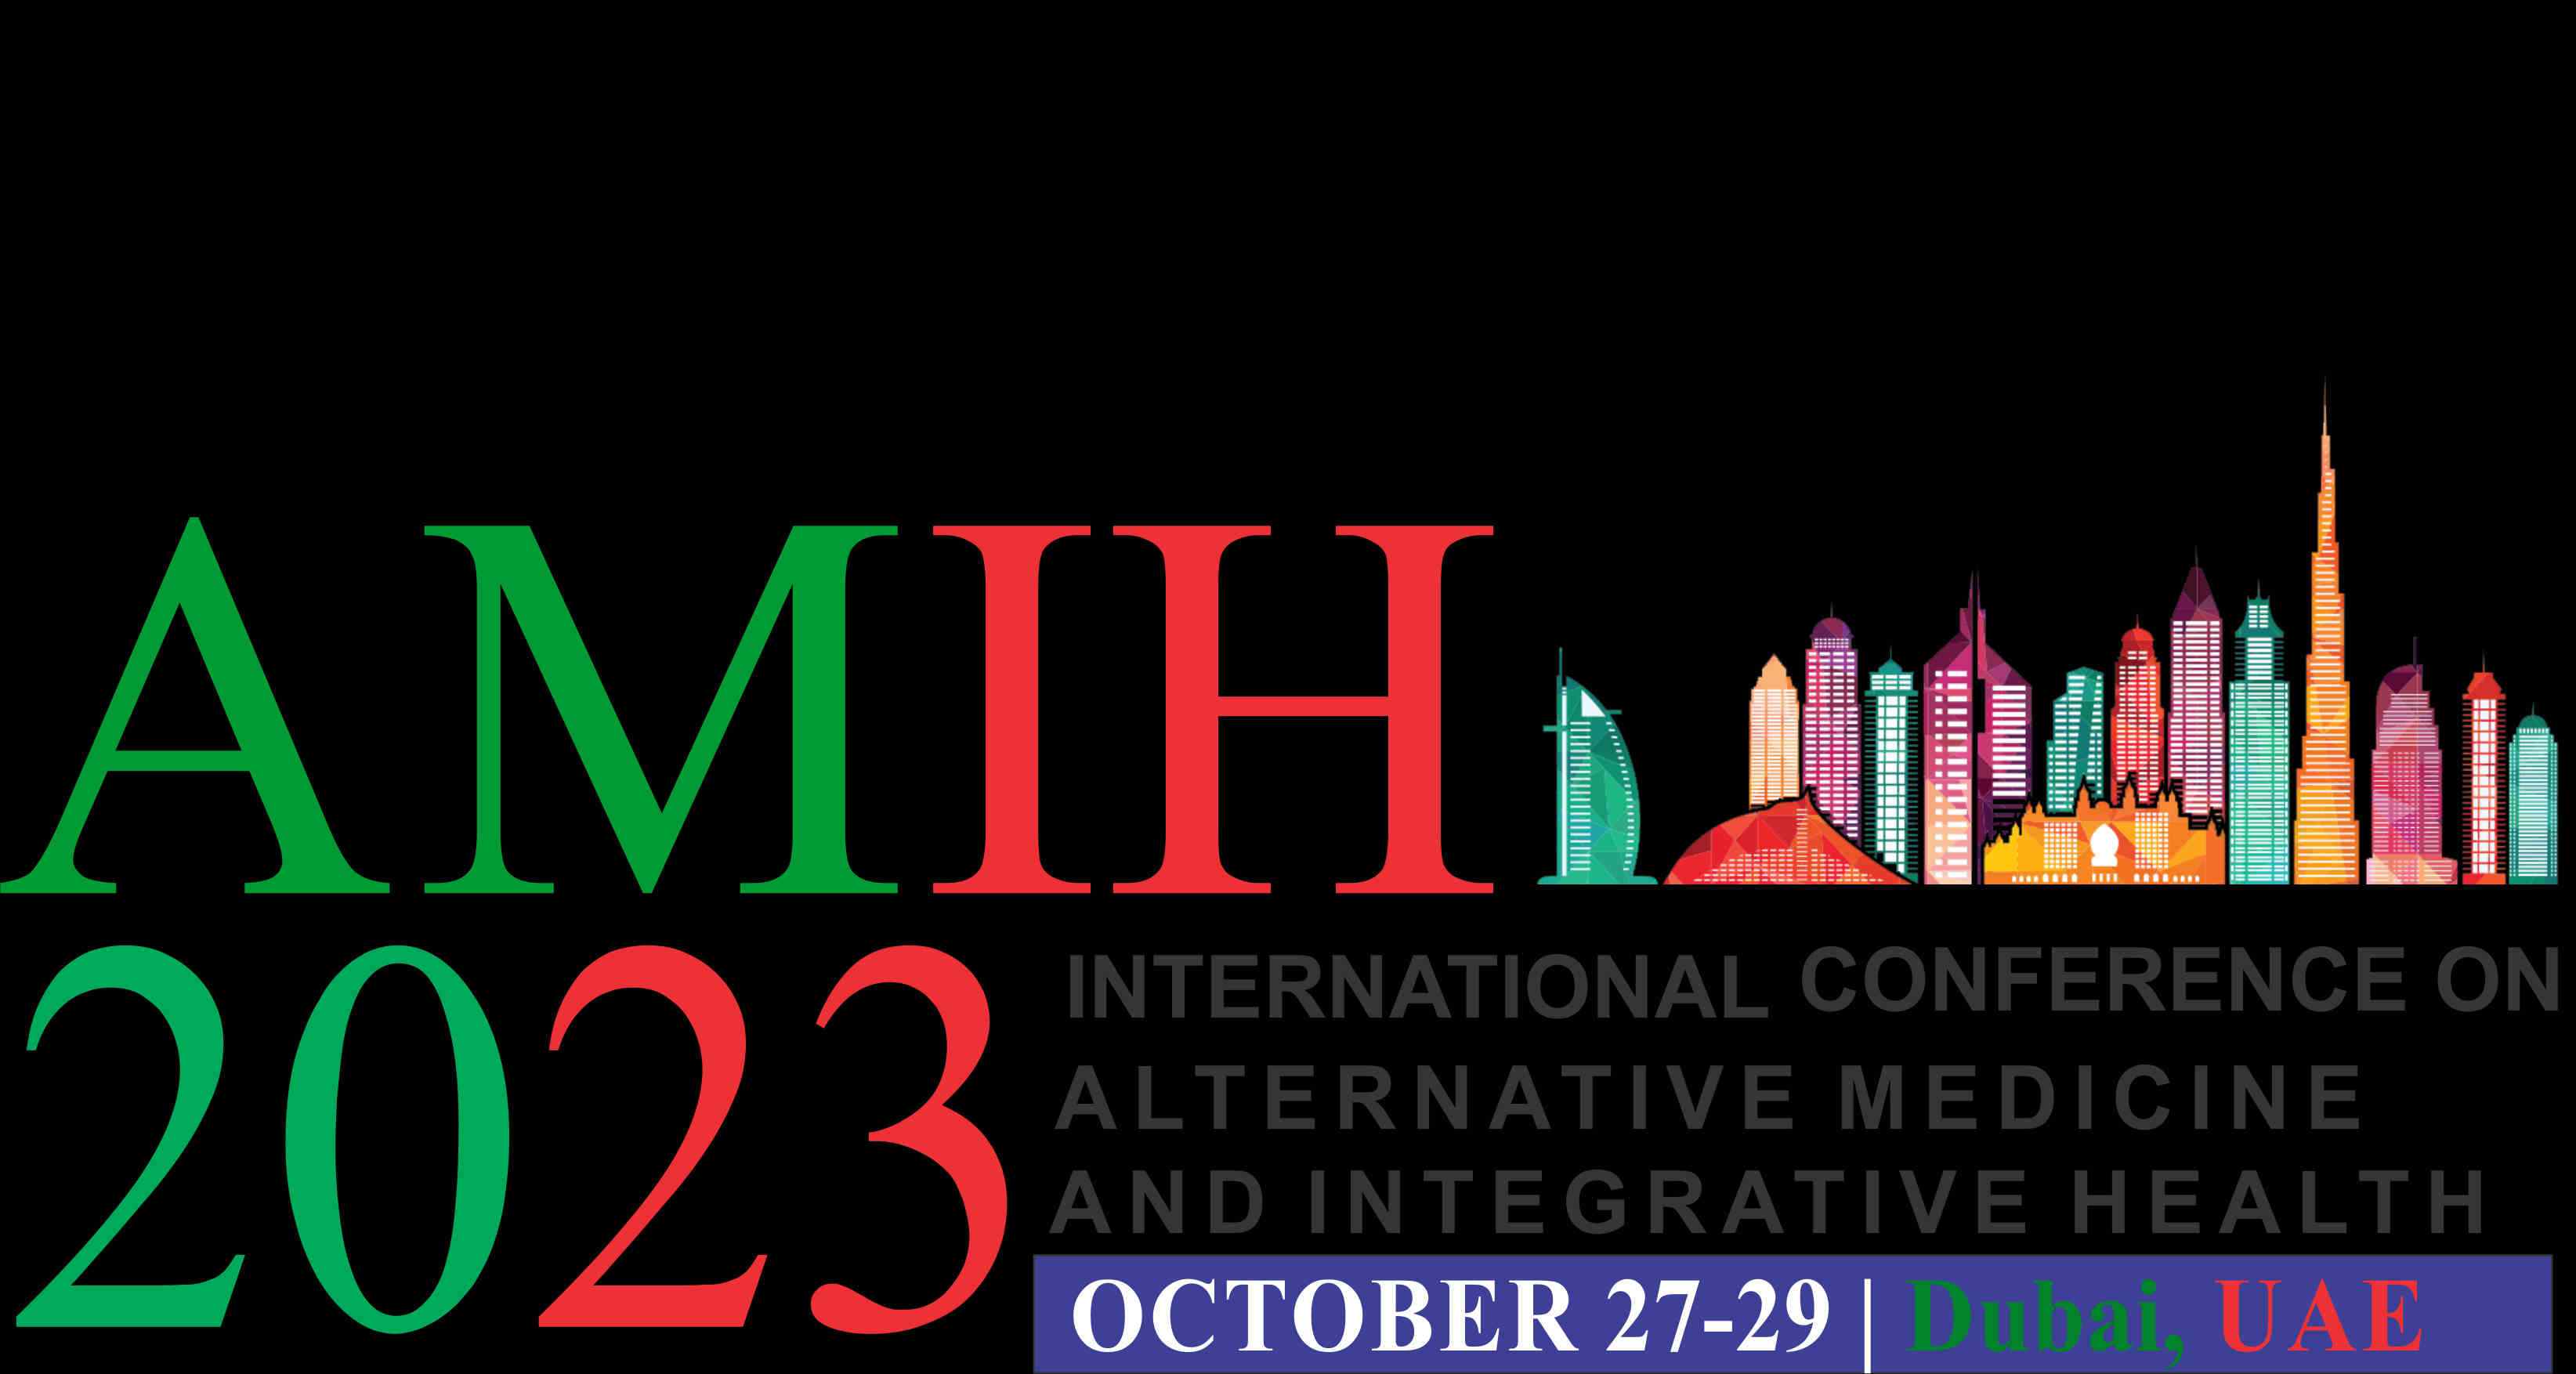 International Conference on Alternative Medicine and Integrative Health